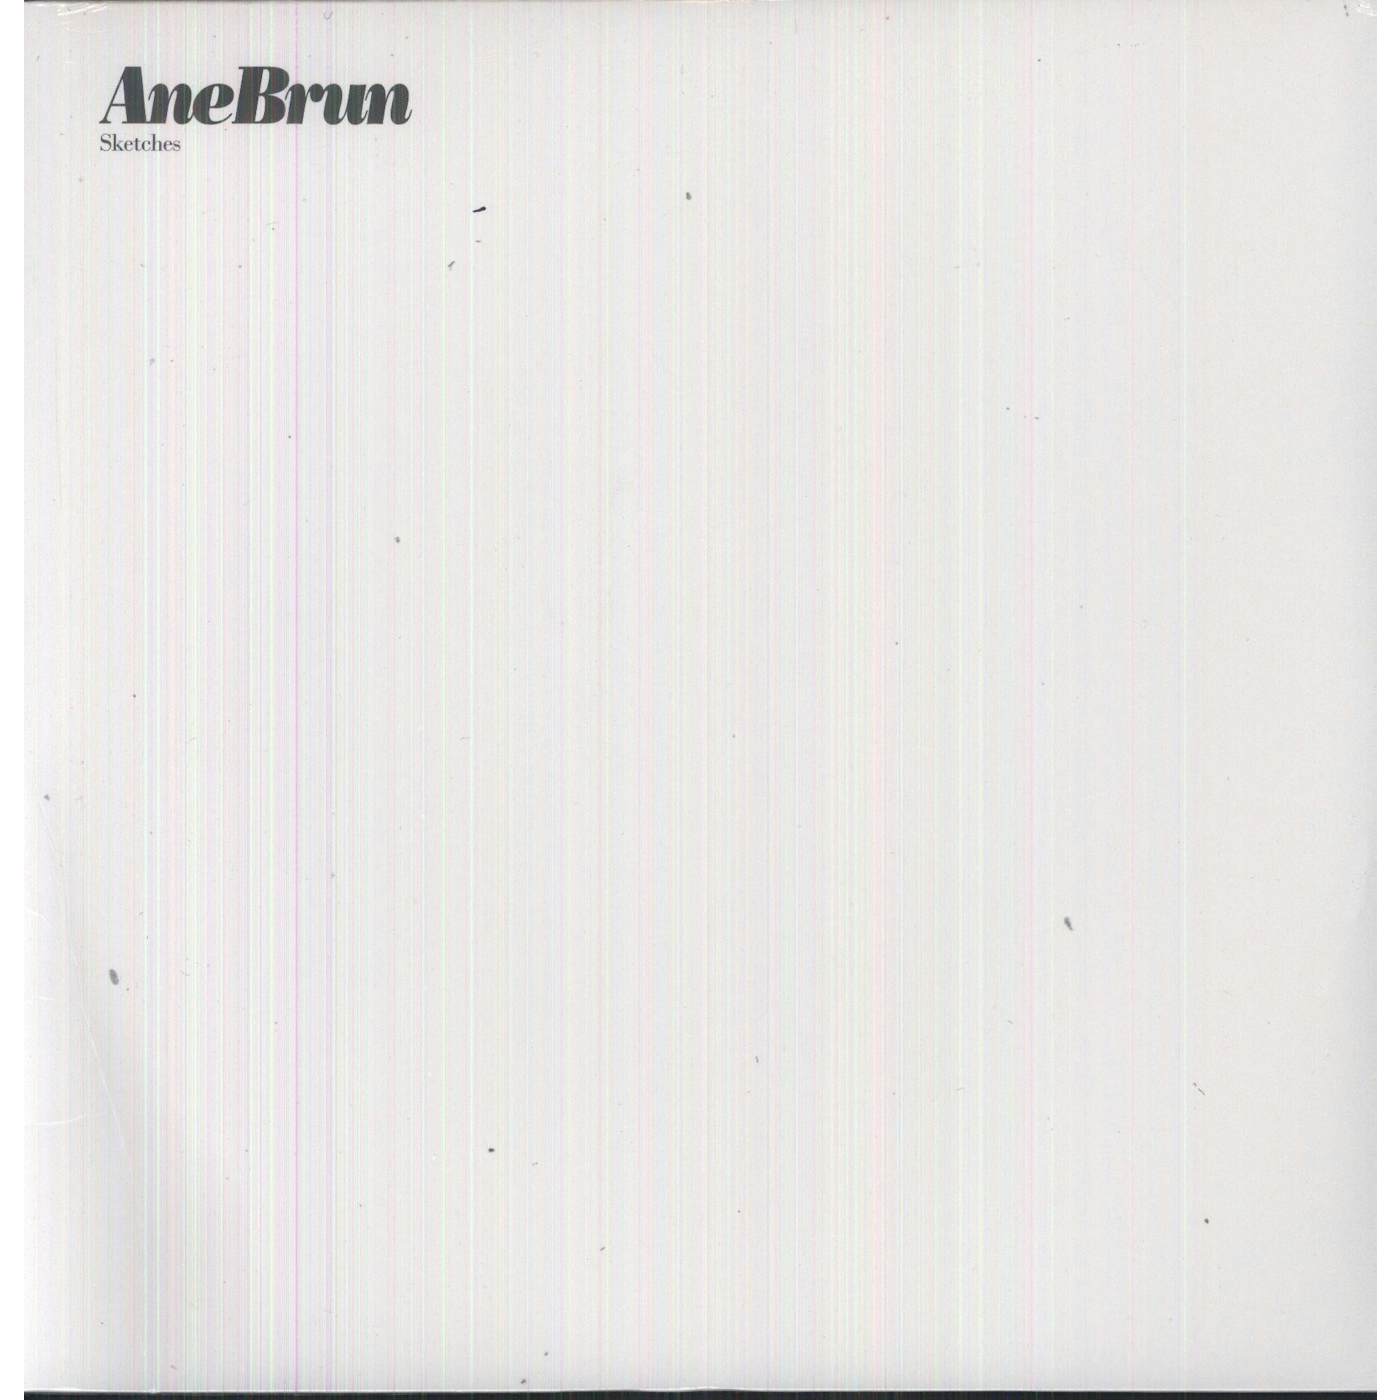 Ane Brun Sketches Vinyl Record